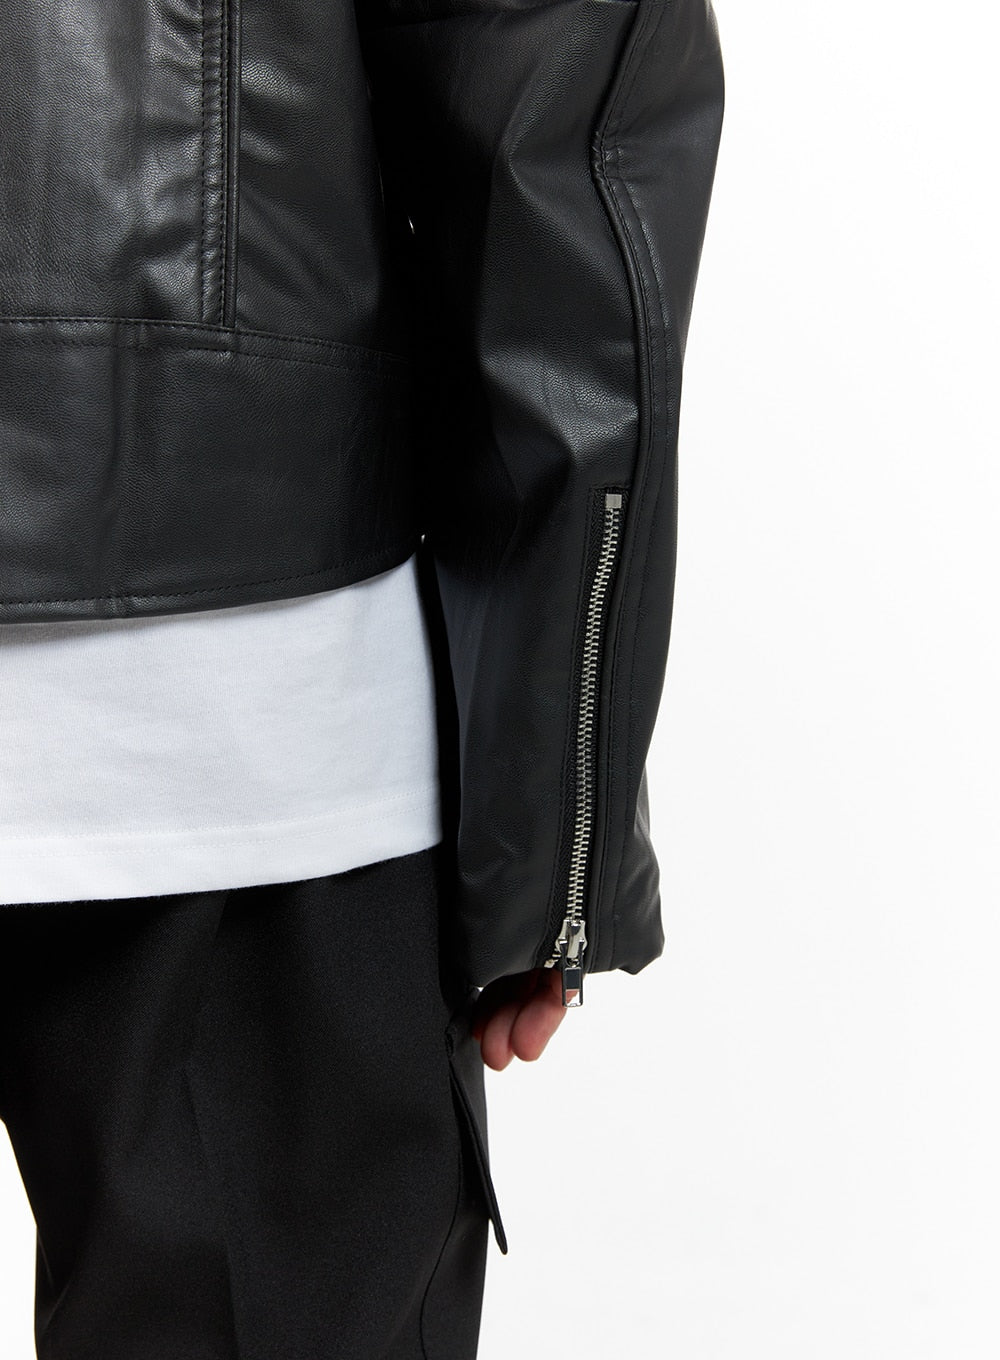 mens-leather-biker-jacket-ia401